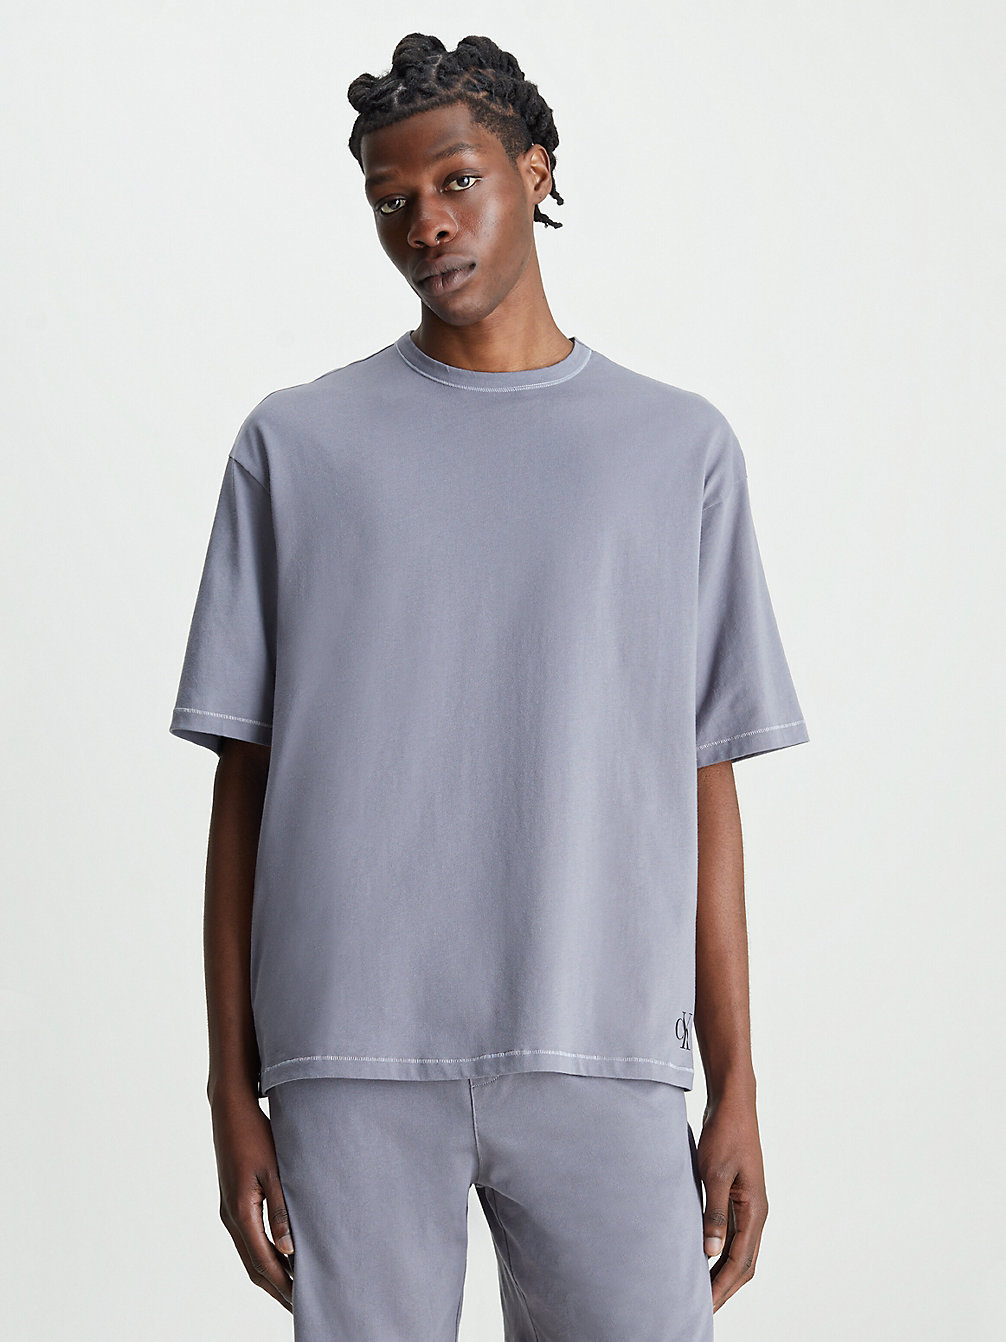 ASPHALT GREY Lounge T-Shirt - Flex Fit undefined men Calvin Klein